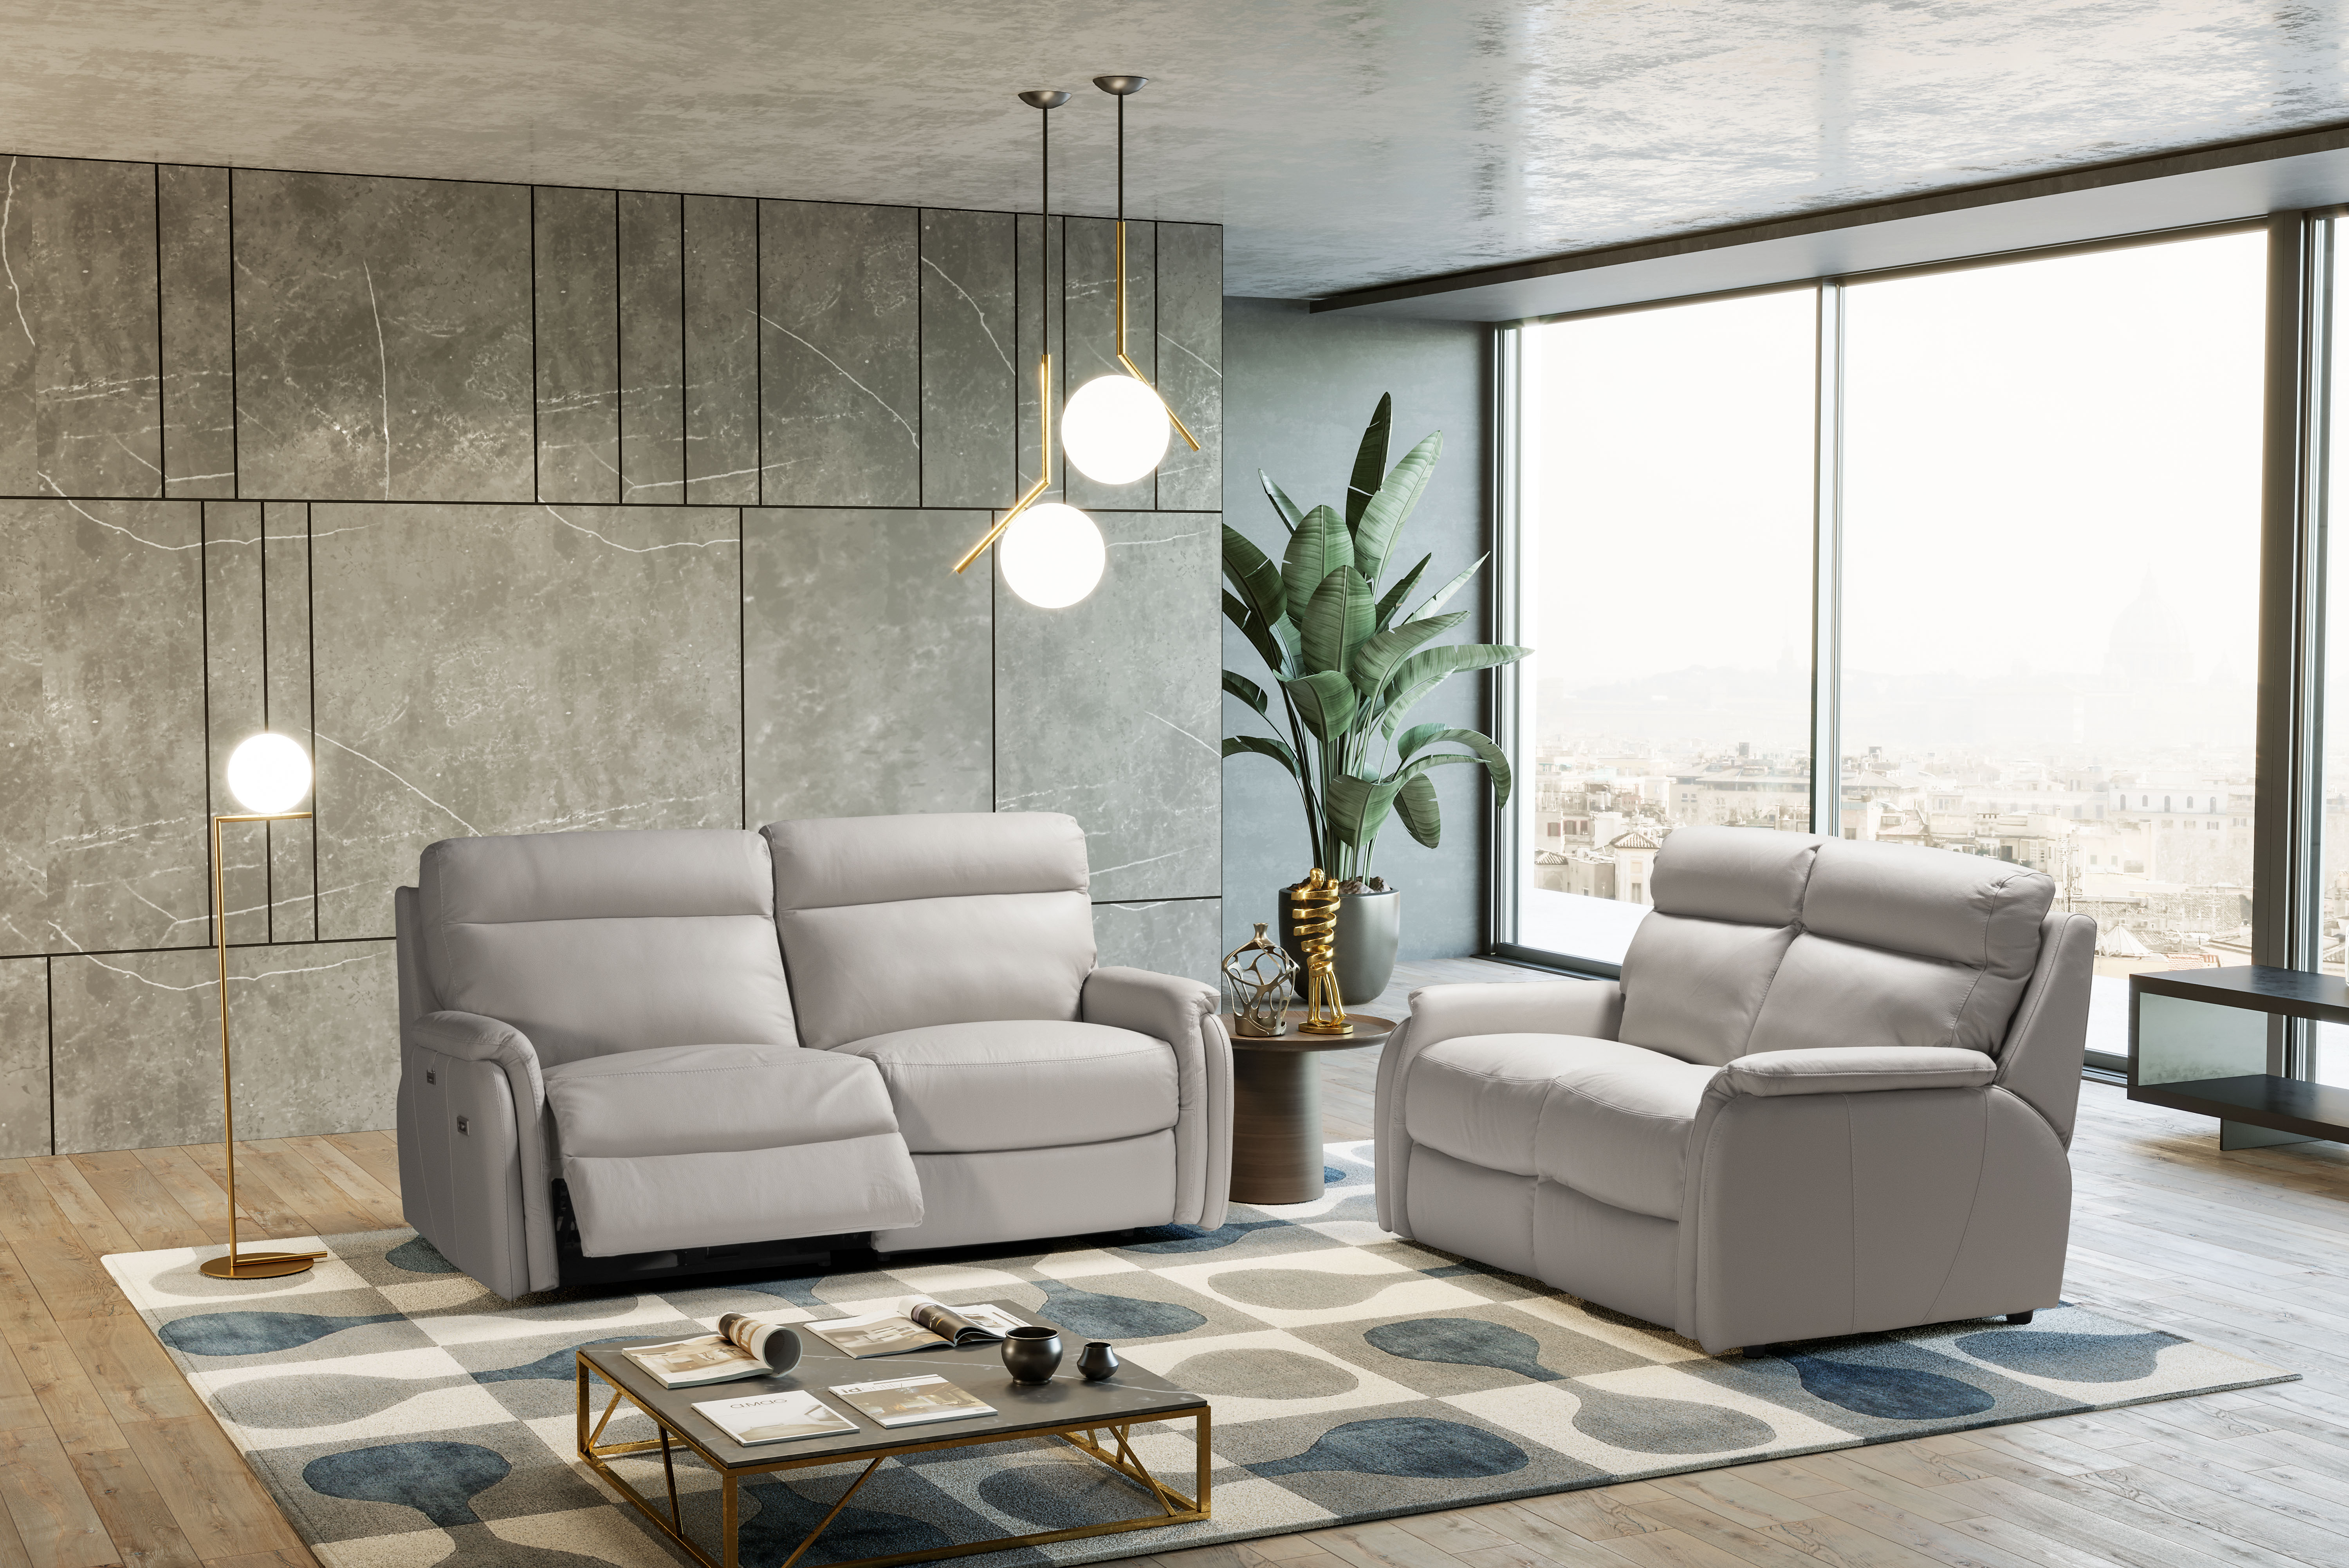 FOX Italian Leather Recliner 3 & 2 Seat Sofa by Galieri - Cenere Light Grey